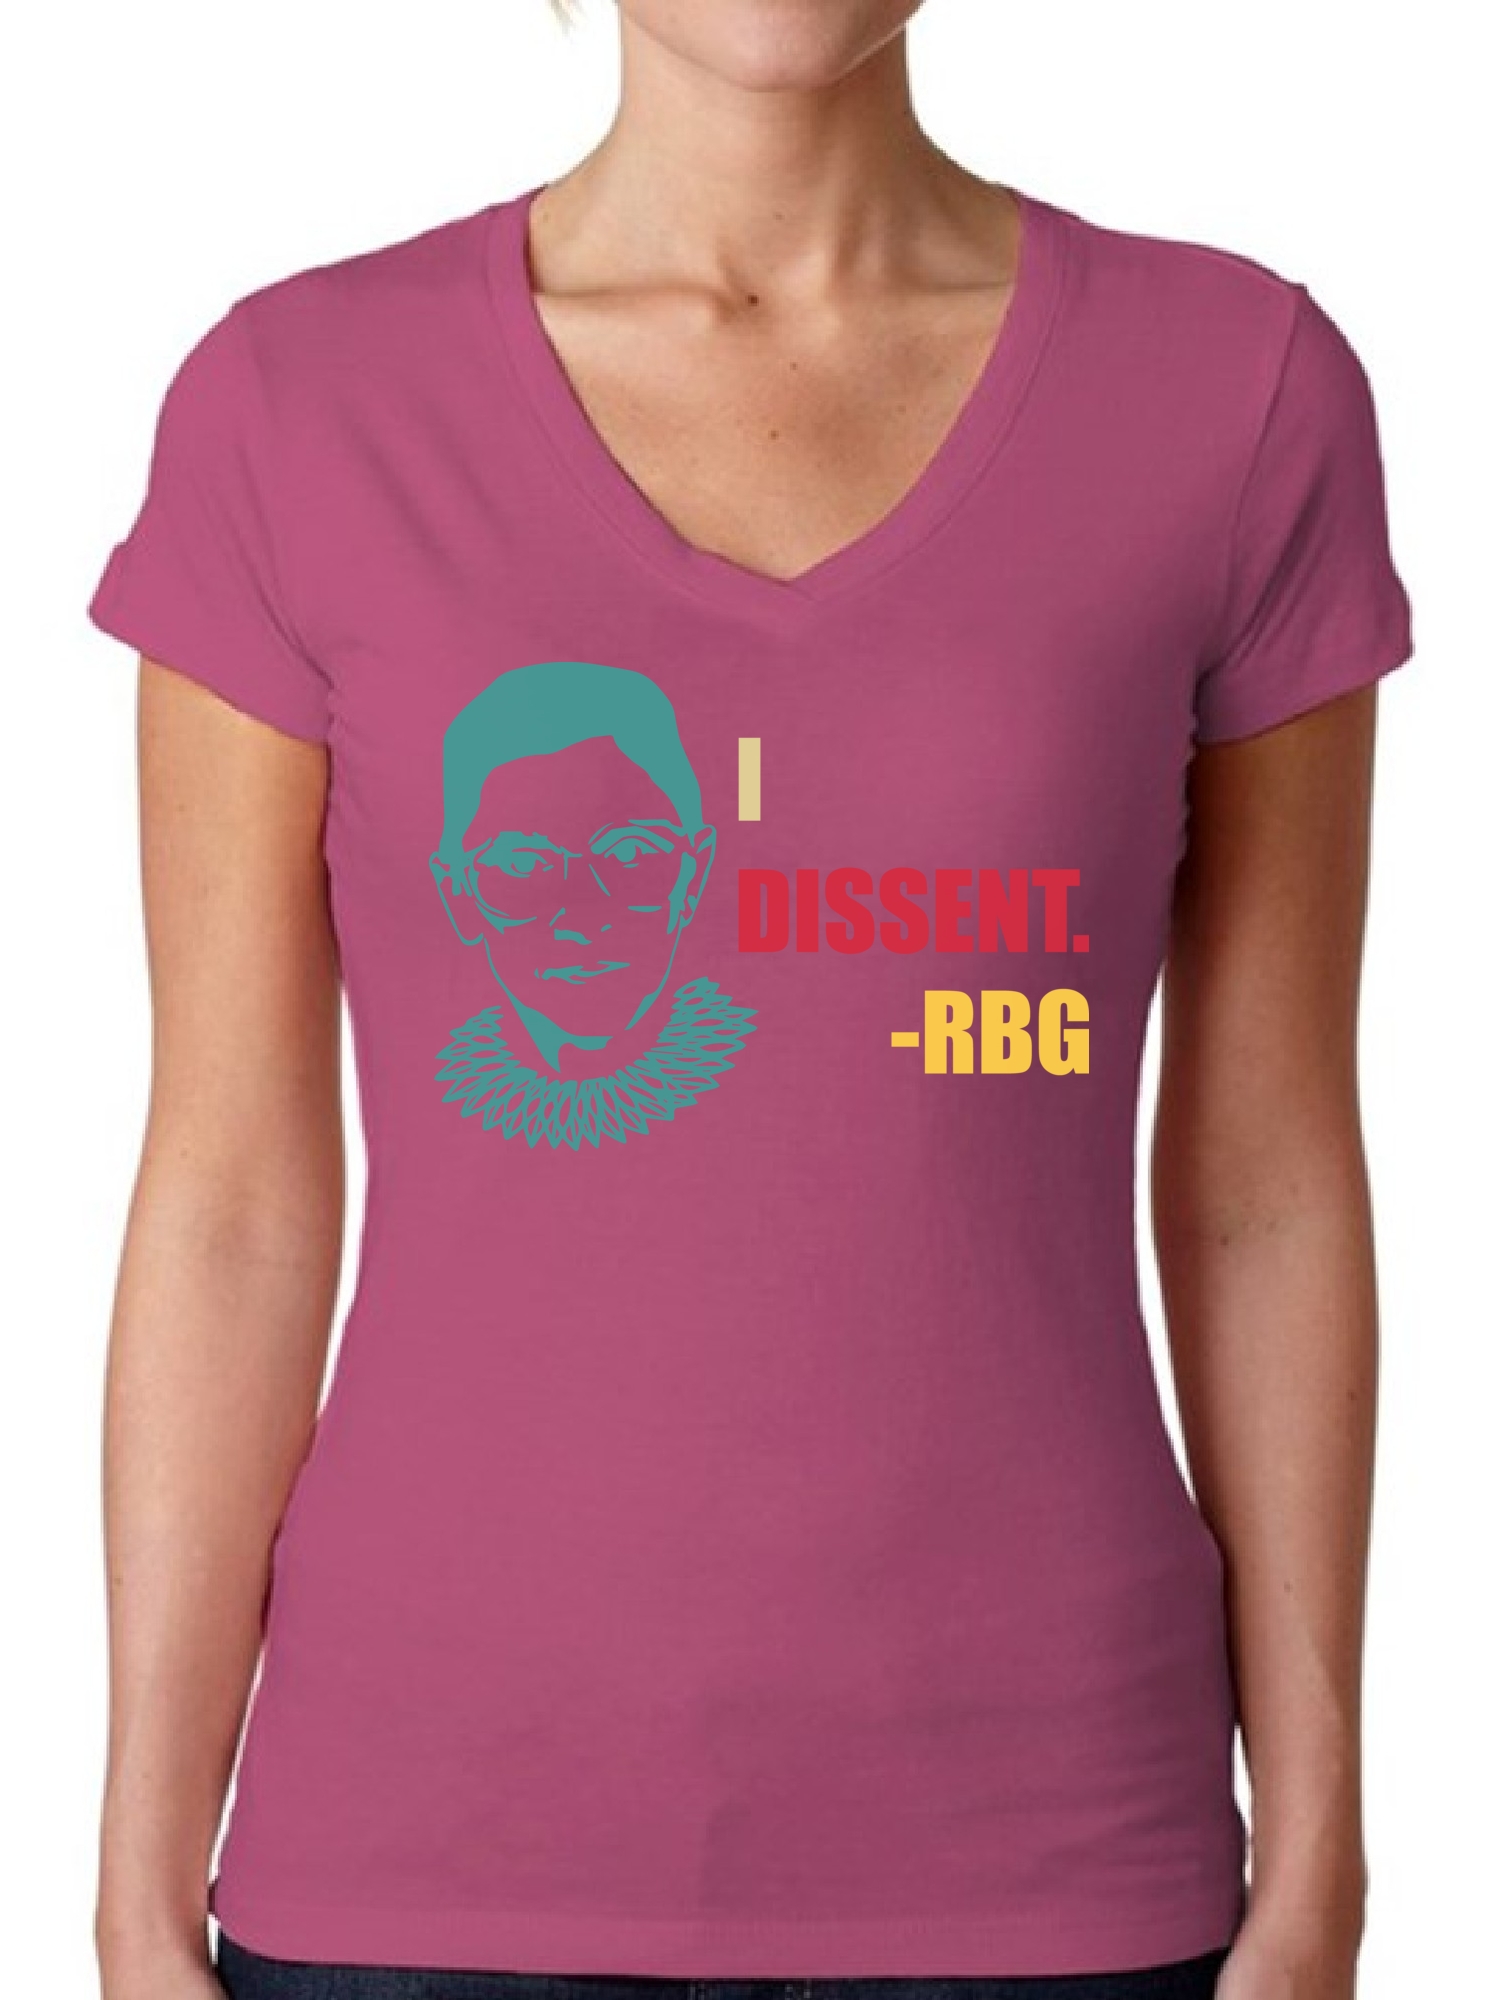 Awkward Styles Ruth Bader Ginsburg Shirt for Women Dissent RBG Notorious V-neck Shirt RBG T Shirt Ladies Support Women Empowerment V neck T-shirt - image 1 of 4